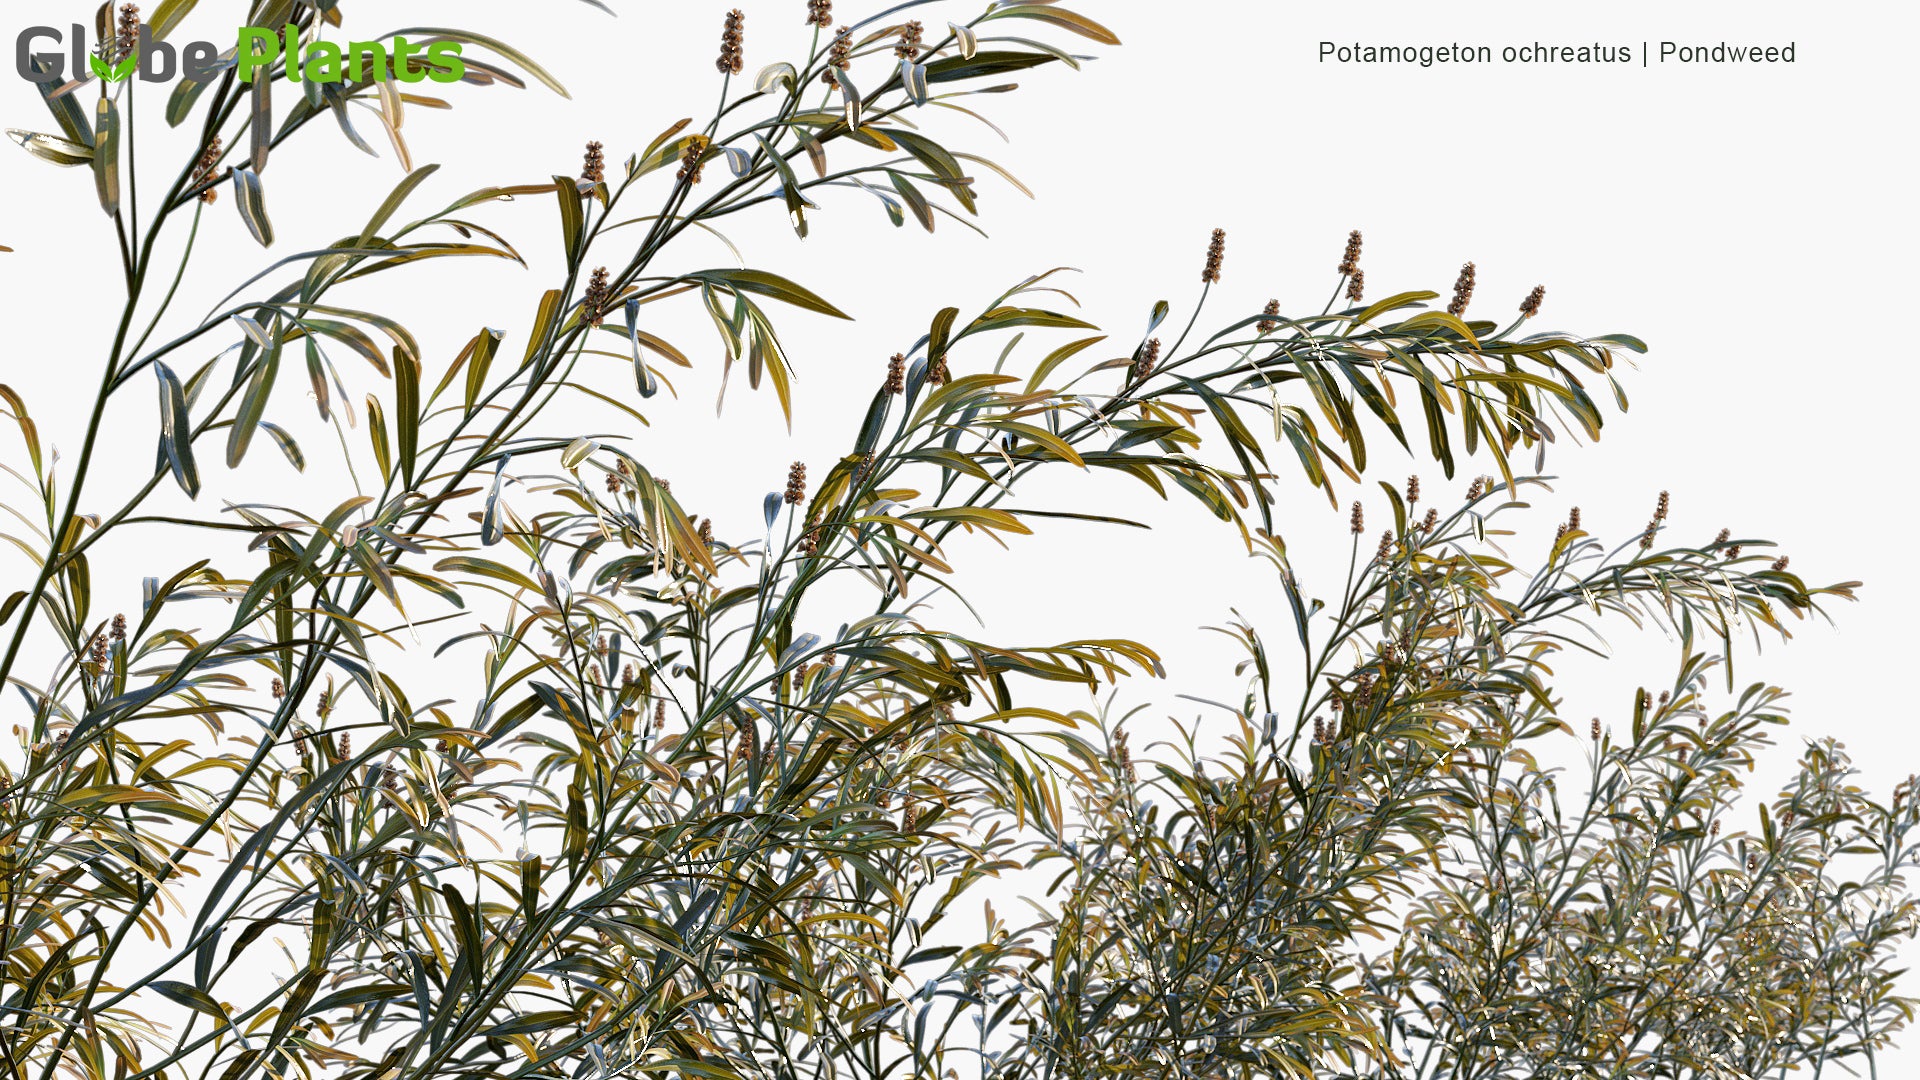 Potamogeton Ochreatus - Pondweed